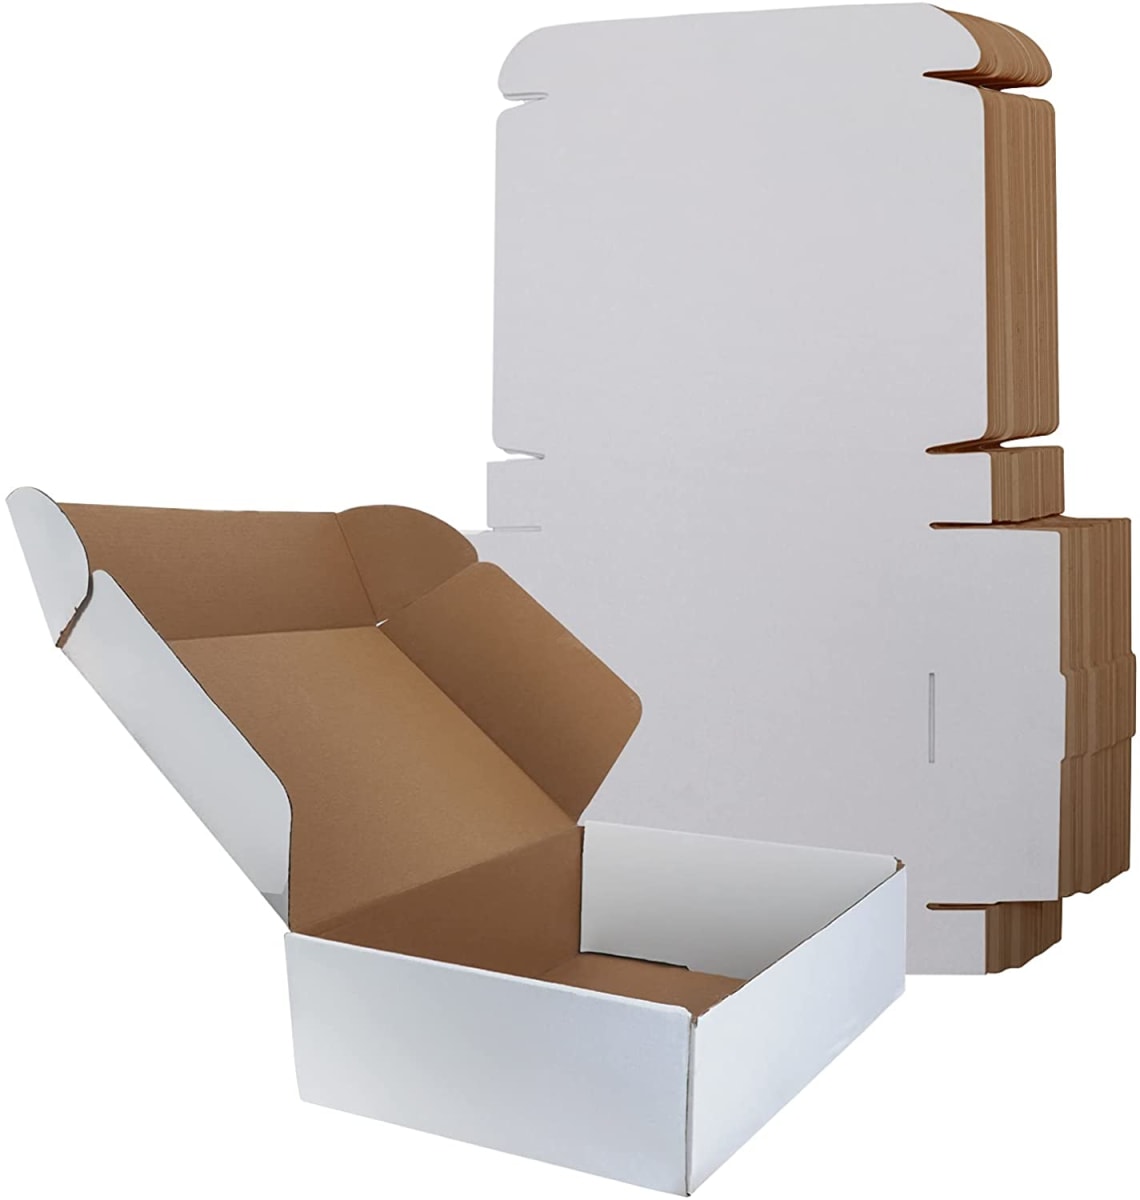 Shipping Boxes 11x8x2 White Corrugated Cardboard Box